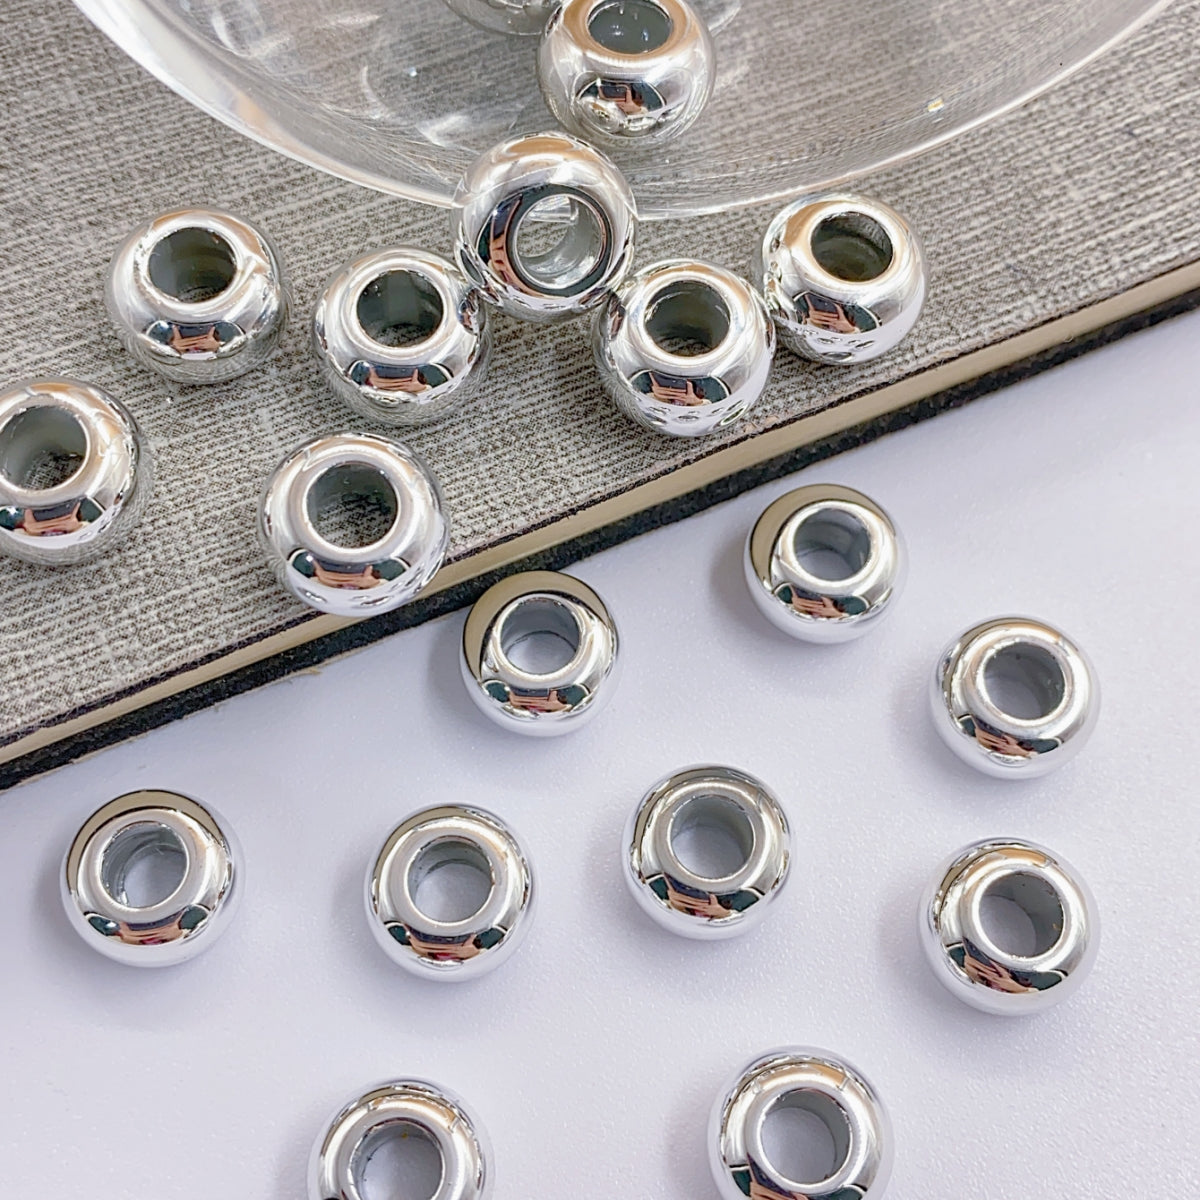 New wheel bead Silver large hole bead garment diy jewelry accessory bead